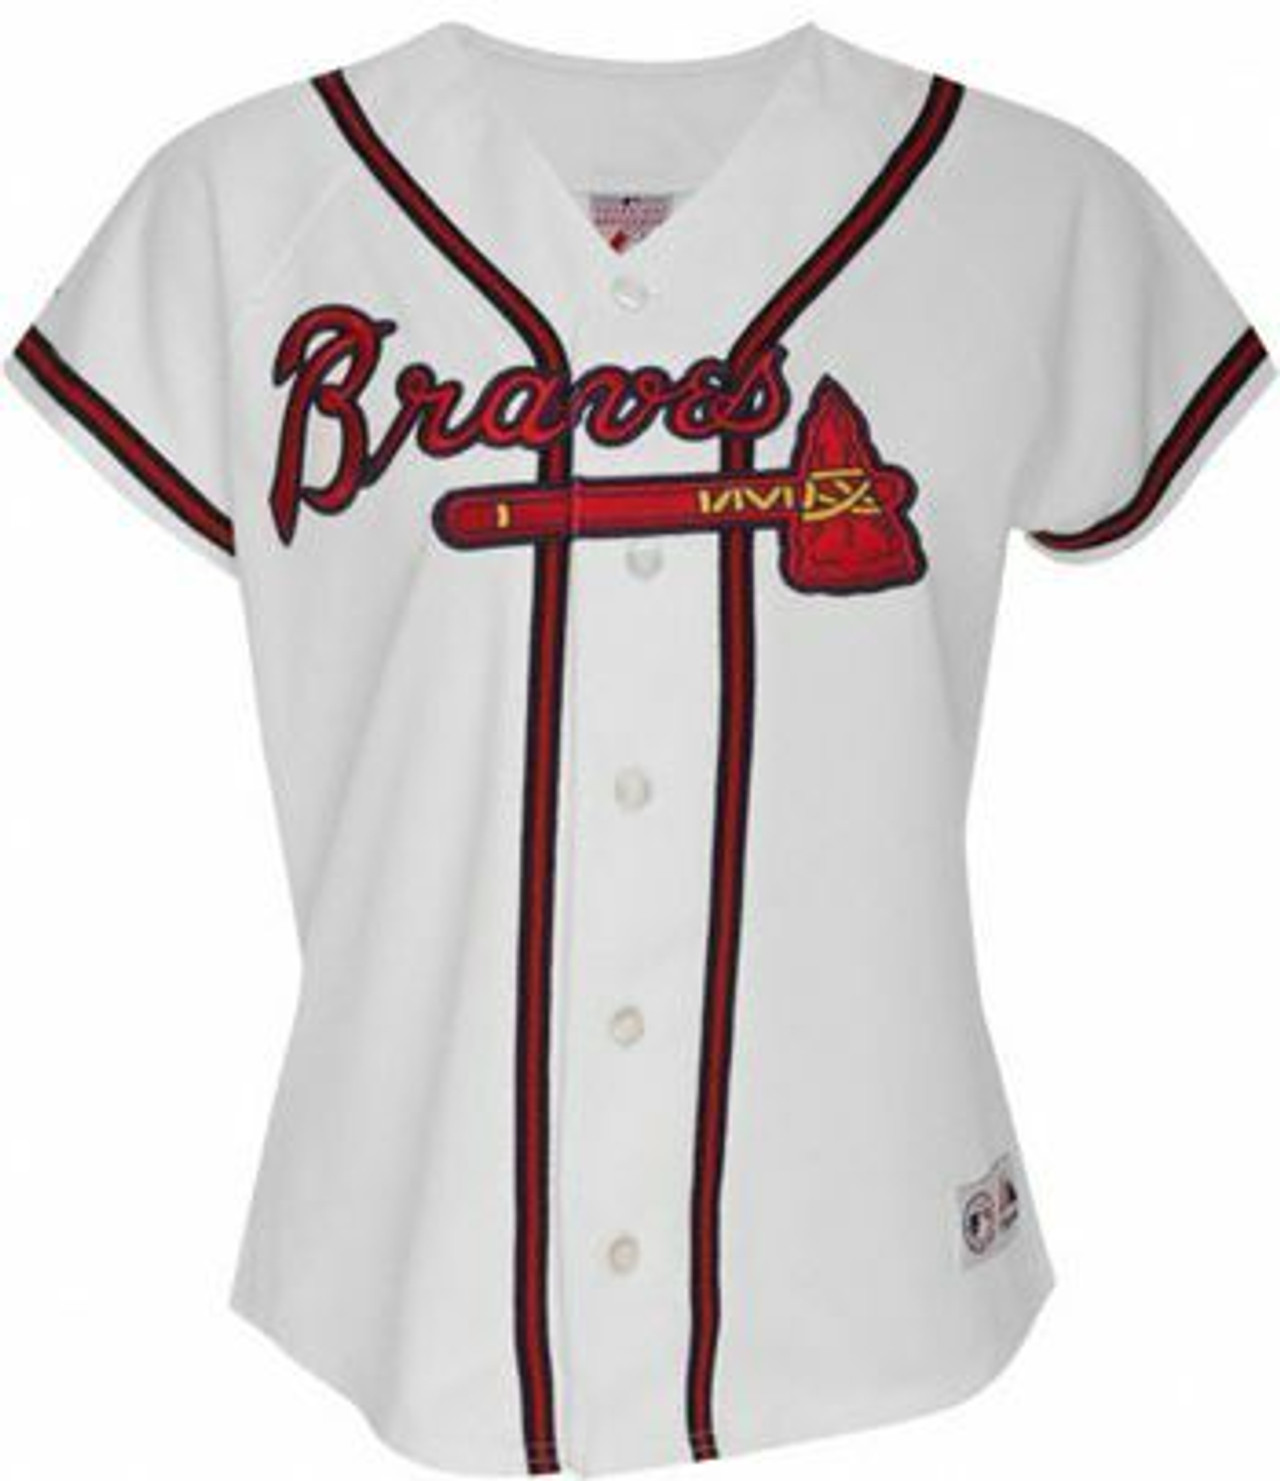 Shop MLB Jerseys - Authentic, Replica, Baseball Uniforms